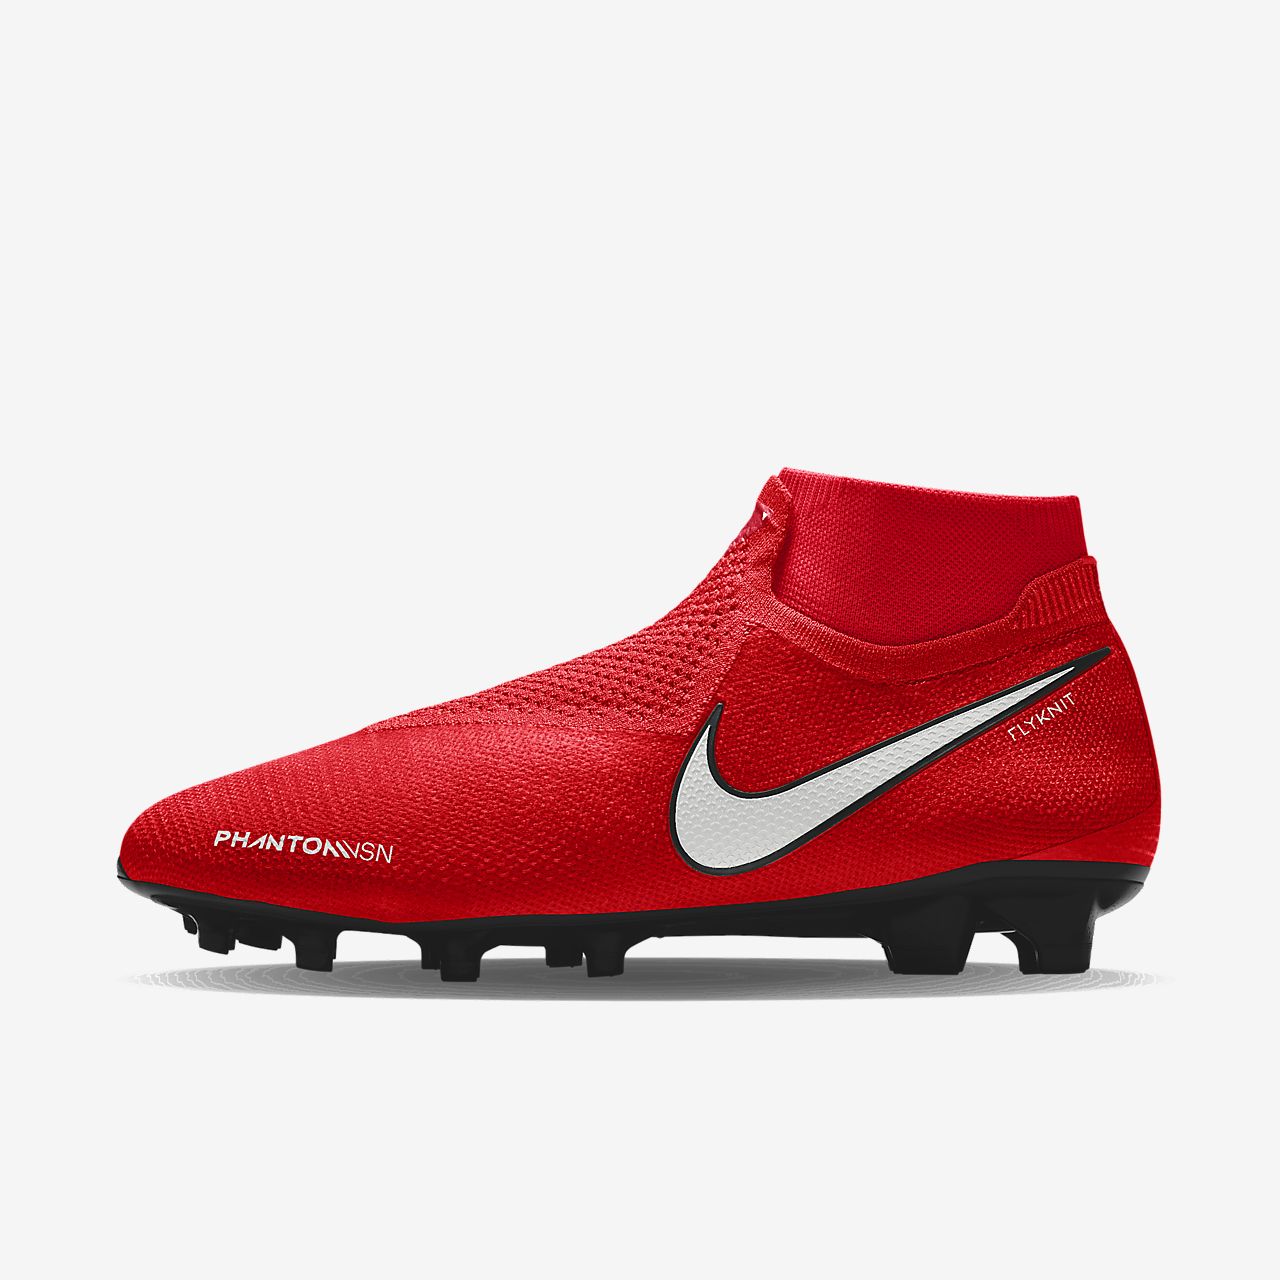 Nike PhantomVSN The Godfather Soccer Cleats 101